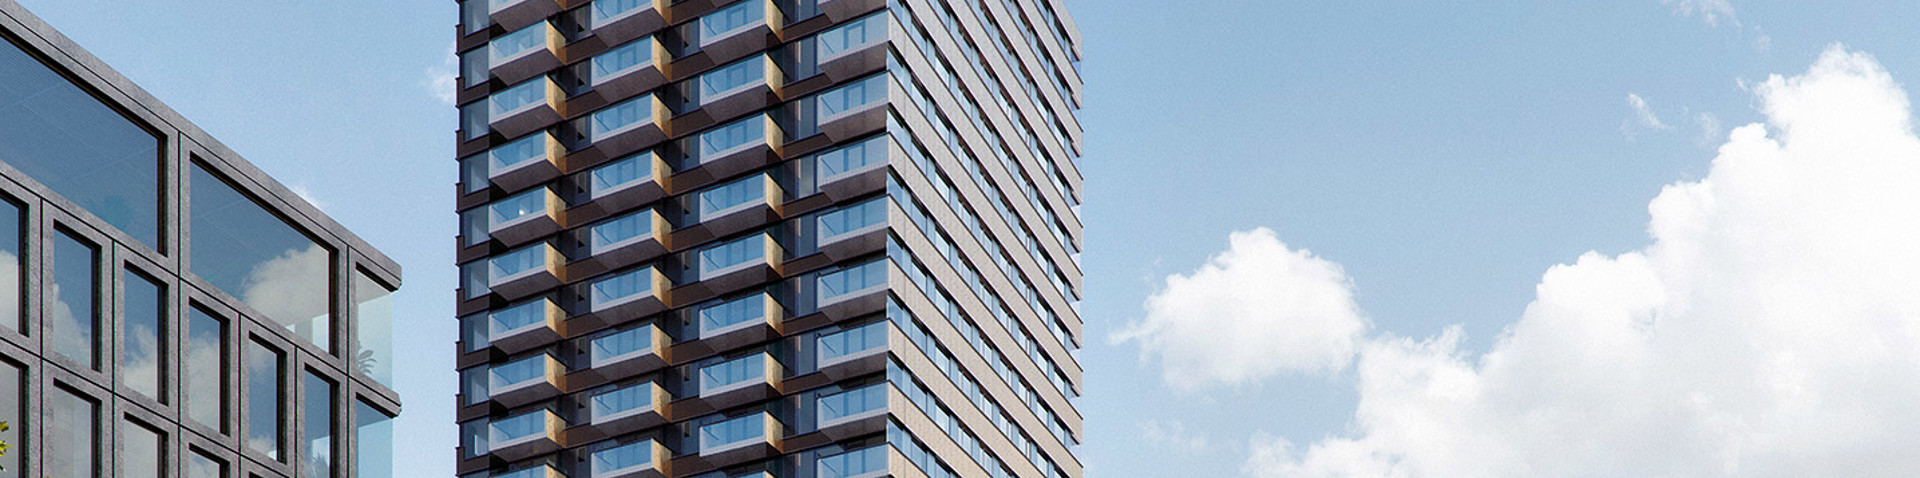 Residential tower Sluisbuurt Amsterdam